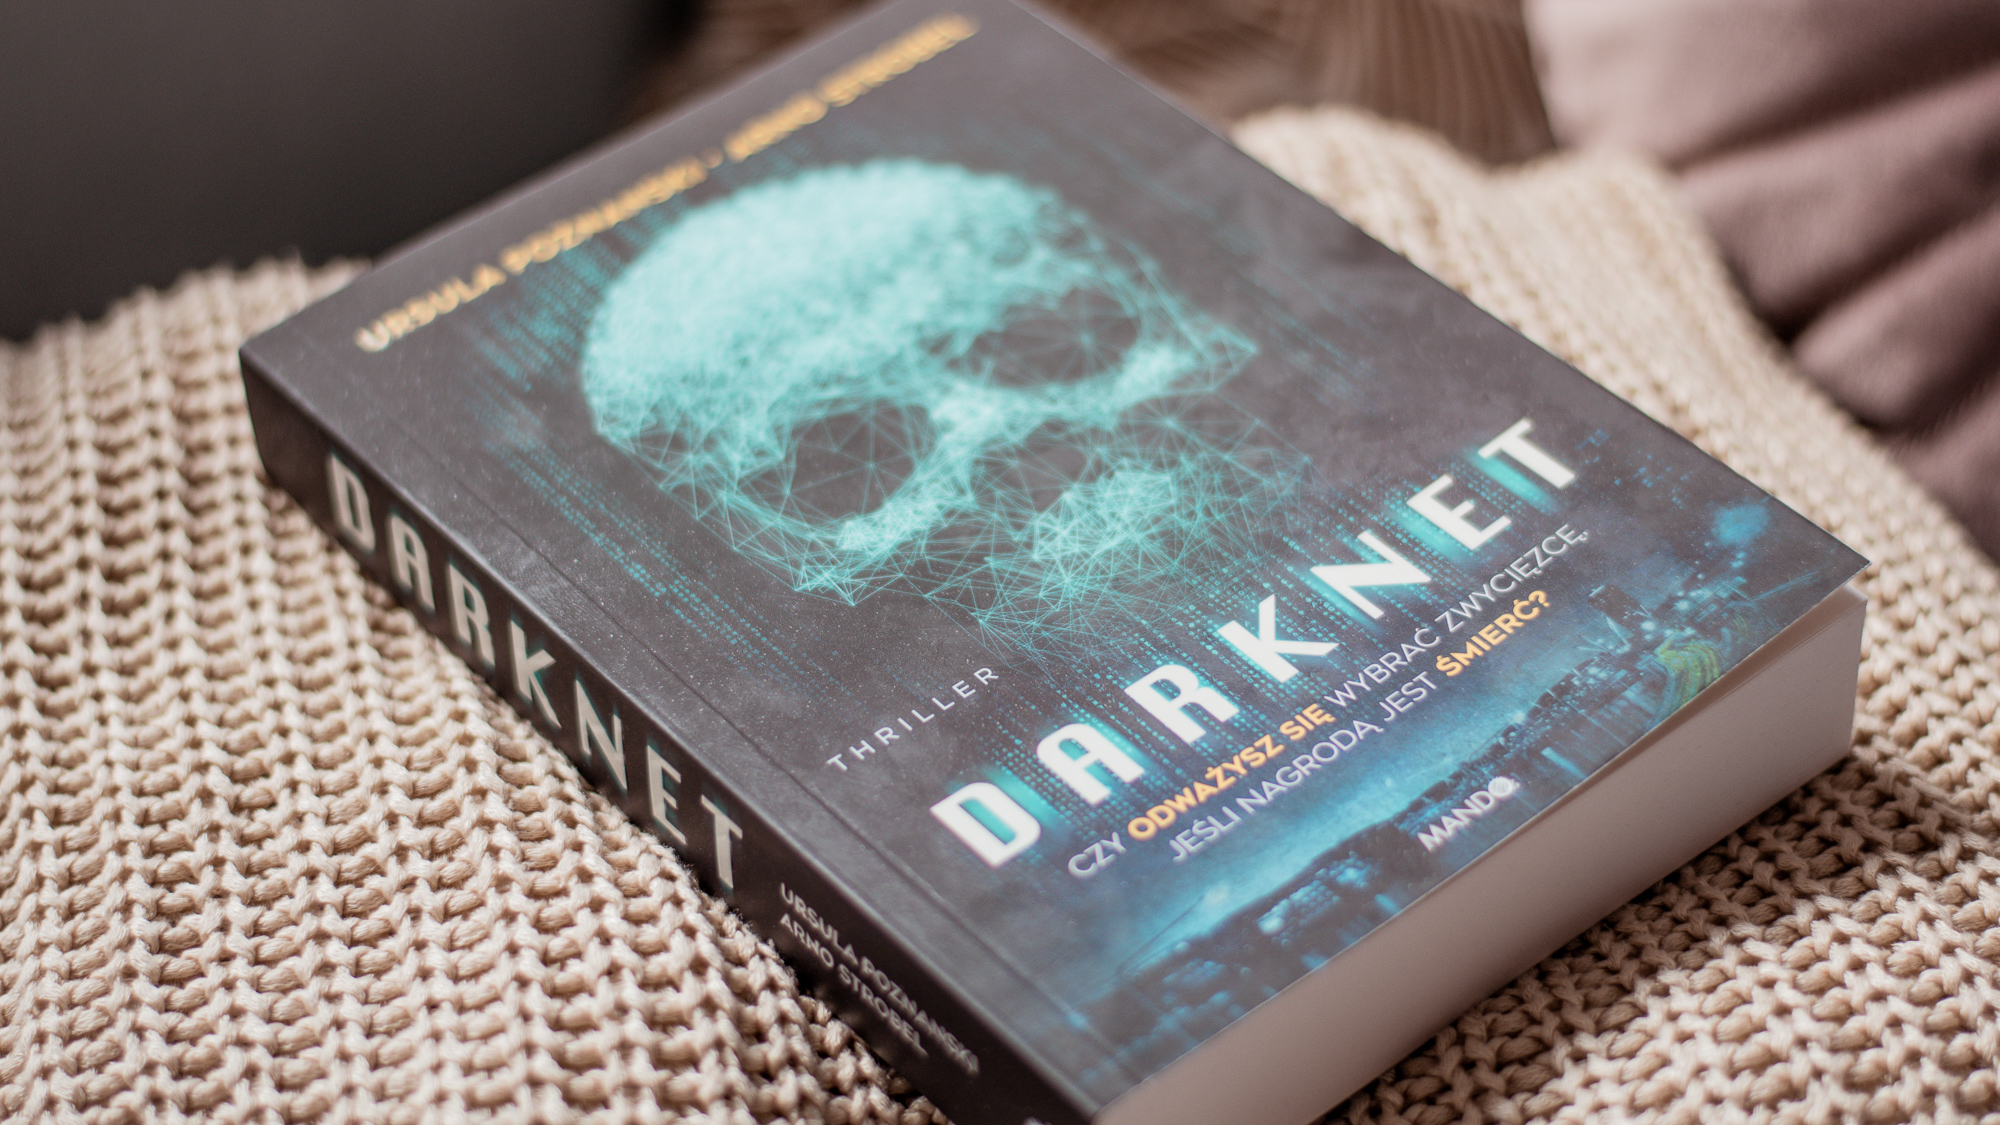 Darknet – Ursula Poznanski, Arno Strobel